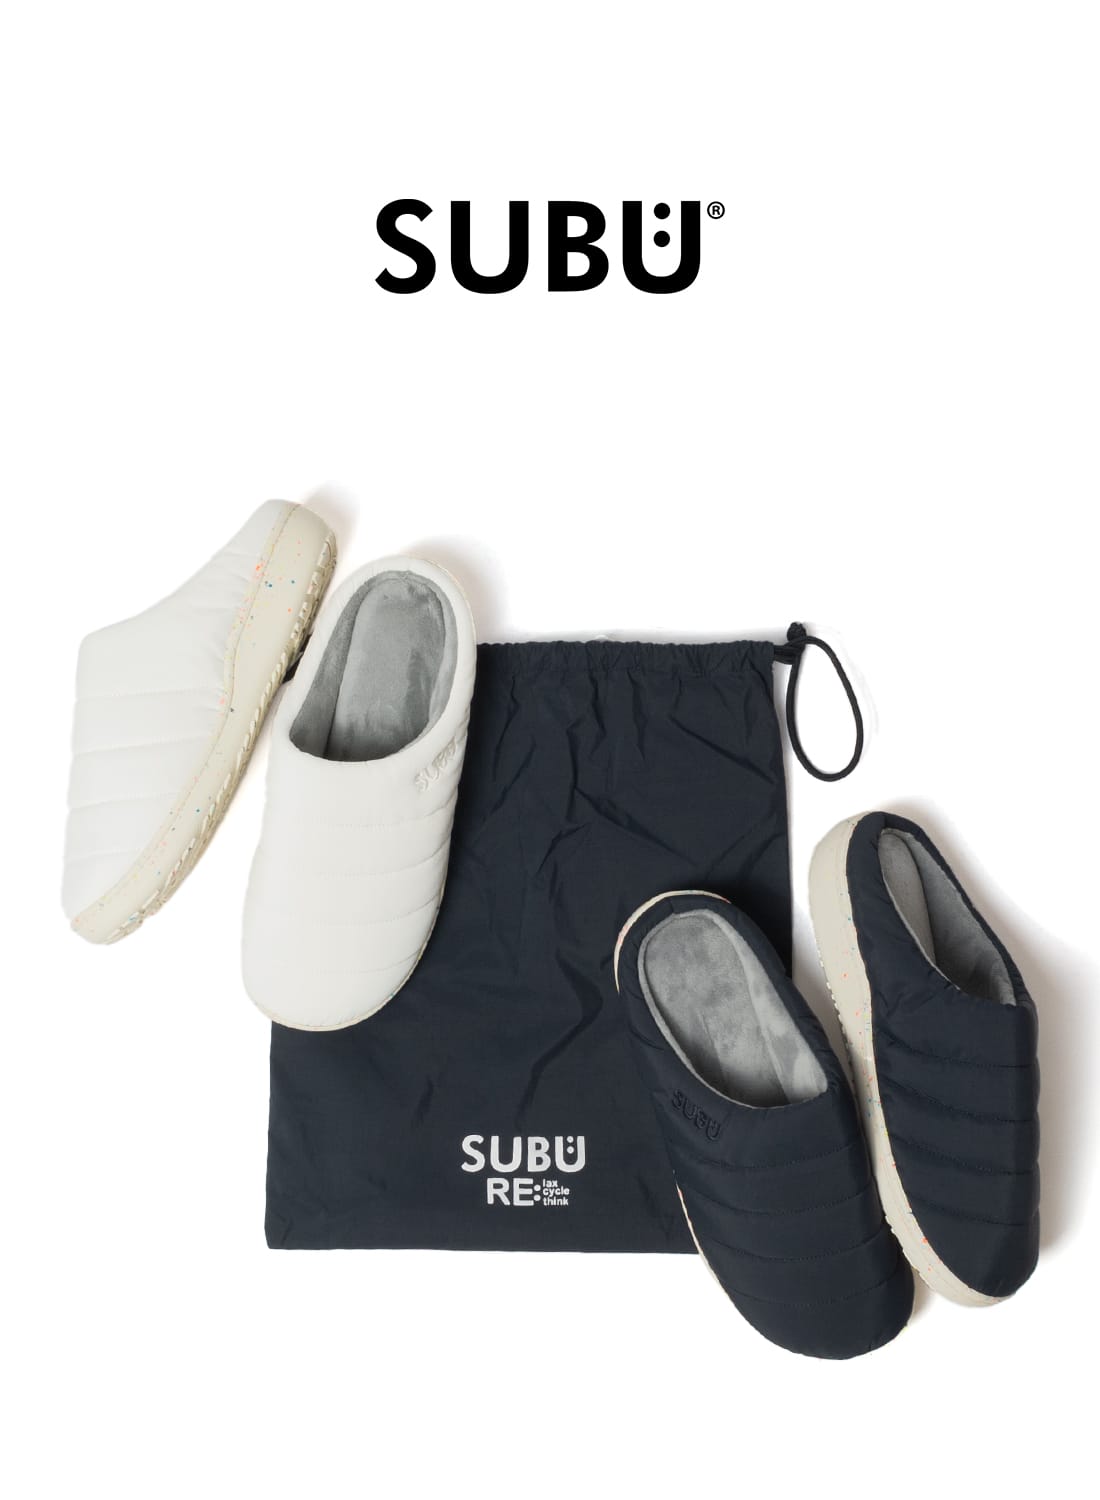 SUBU RE:BK 2 26-27.5cm サスティナブルを課題としたSUBU - サンダル